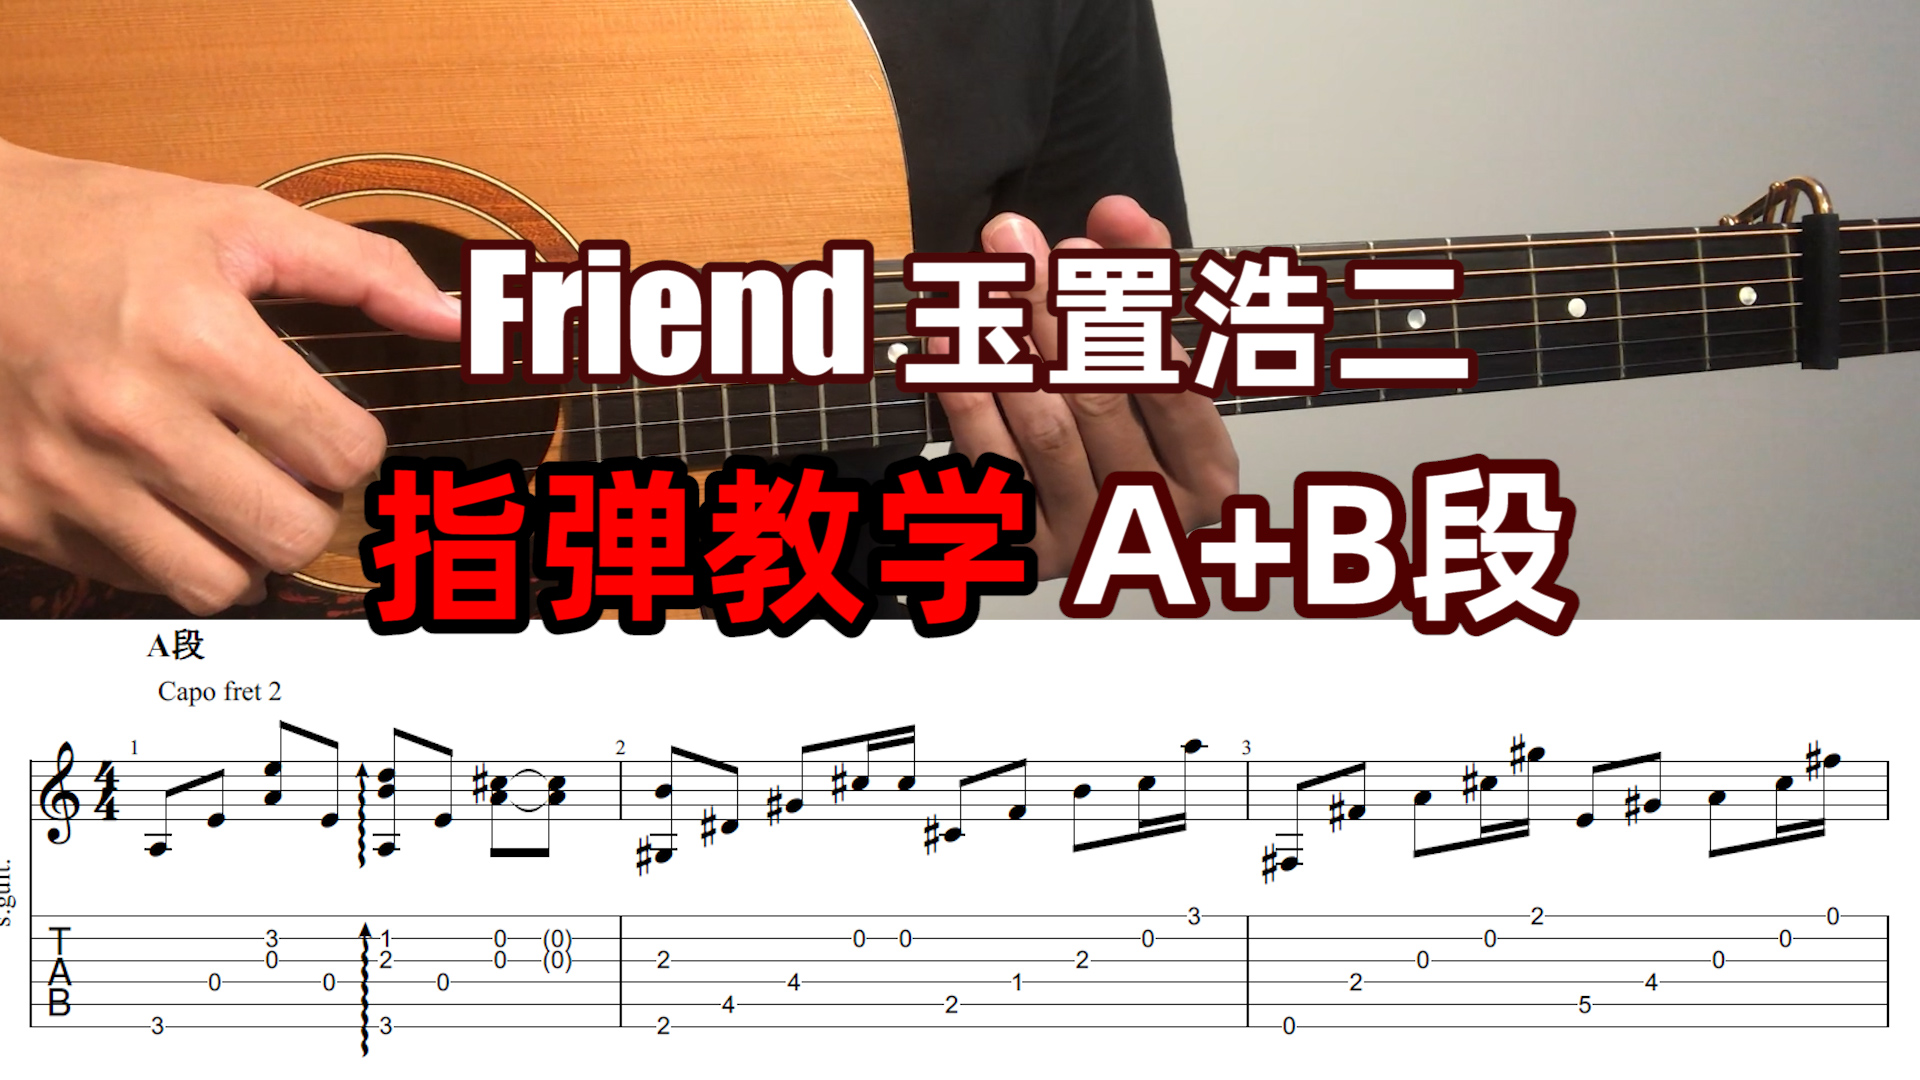 《Friend》 玉置浩二吉他谱 玉置浩二 吉他图片谱2张 | 吉他谱大全